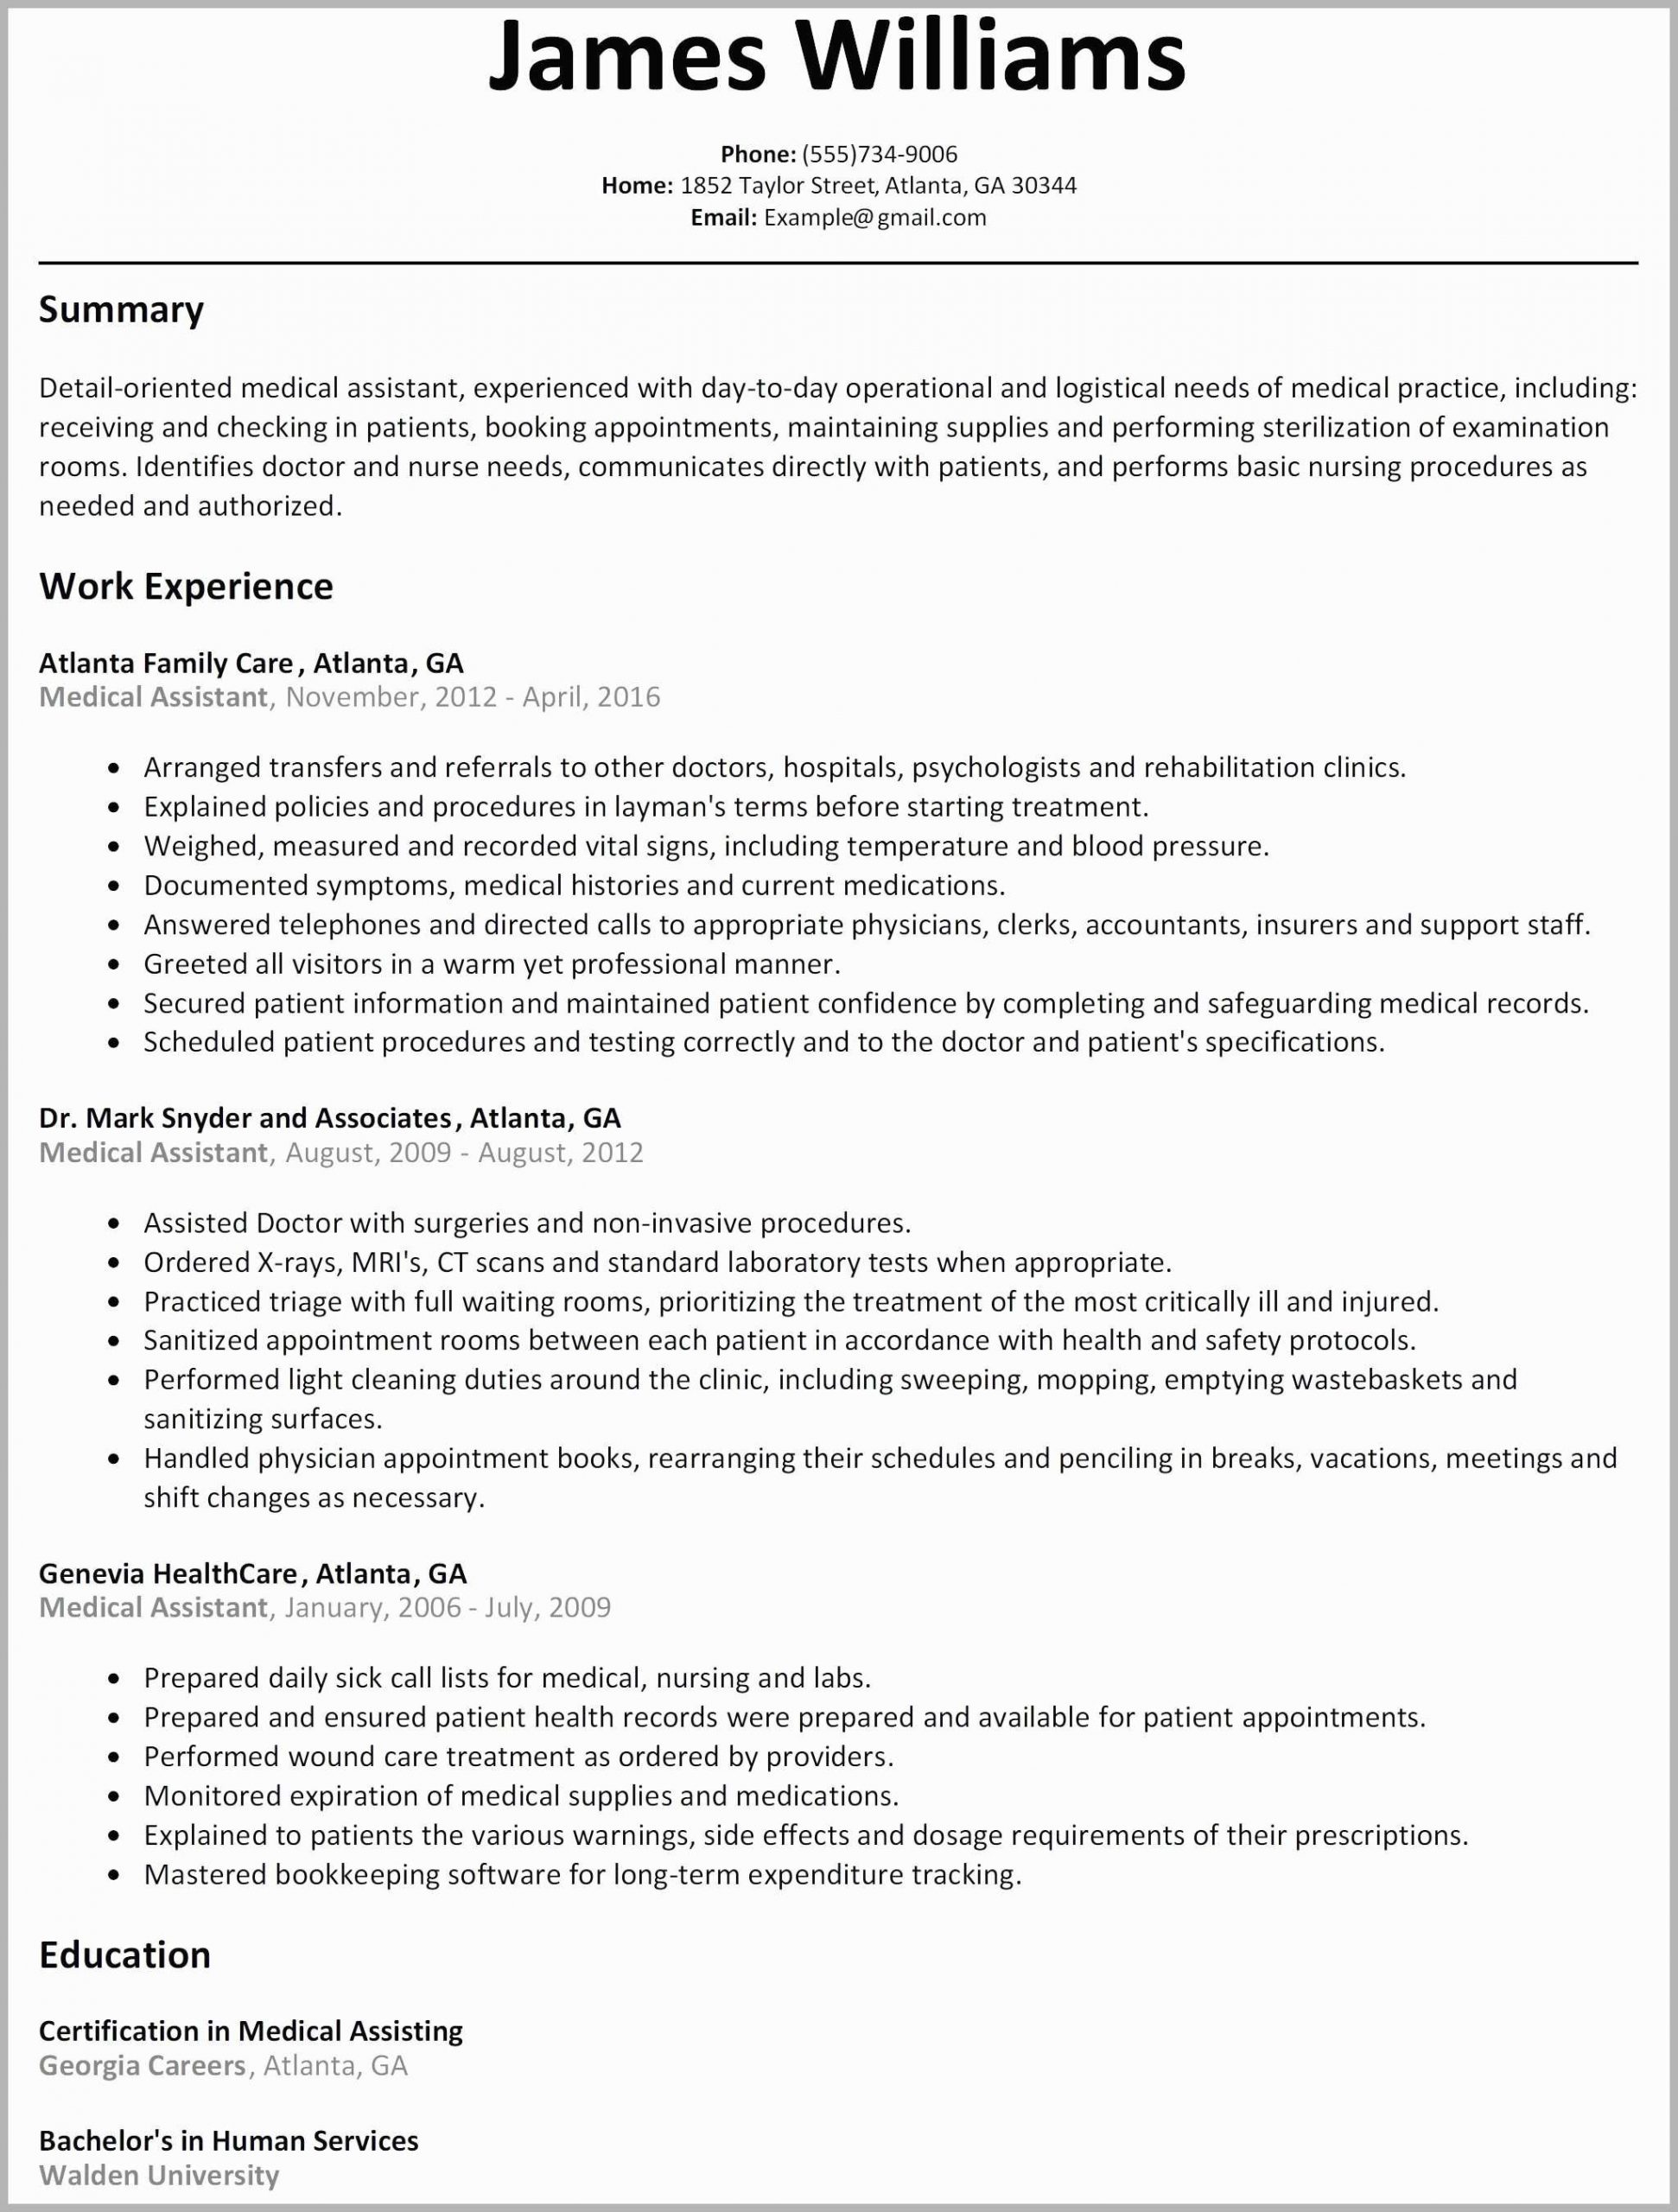 Sample Resume for Industrial Maintenance Technician Industrial Maintenance Manager Resume October 2021